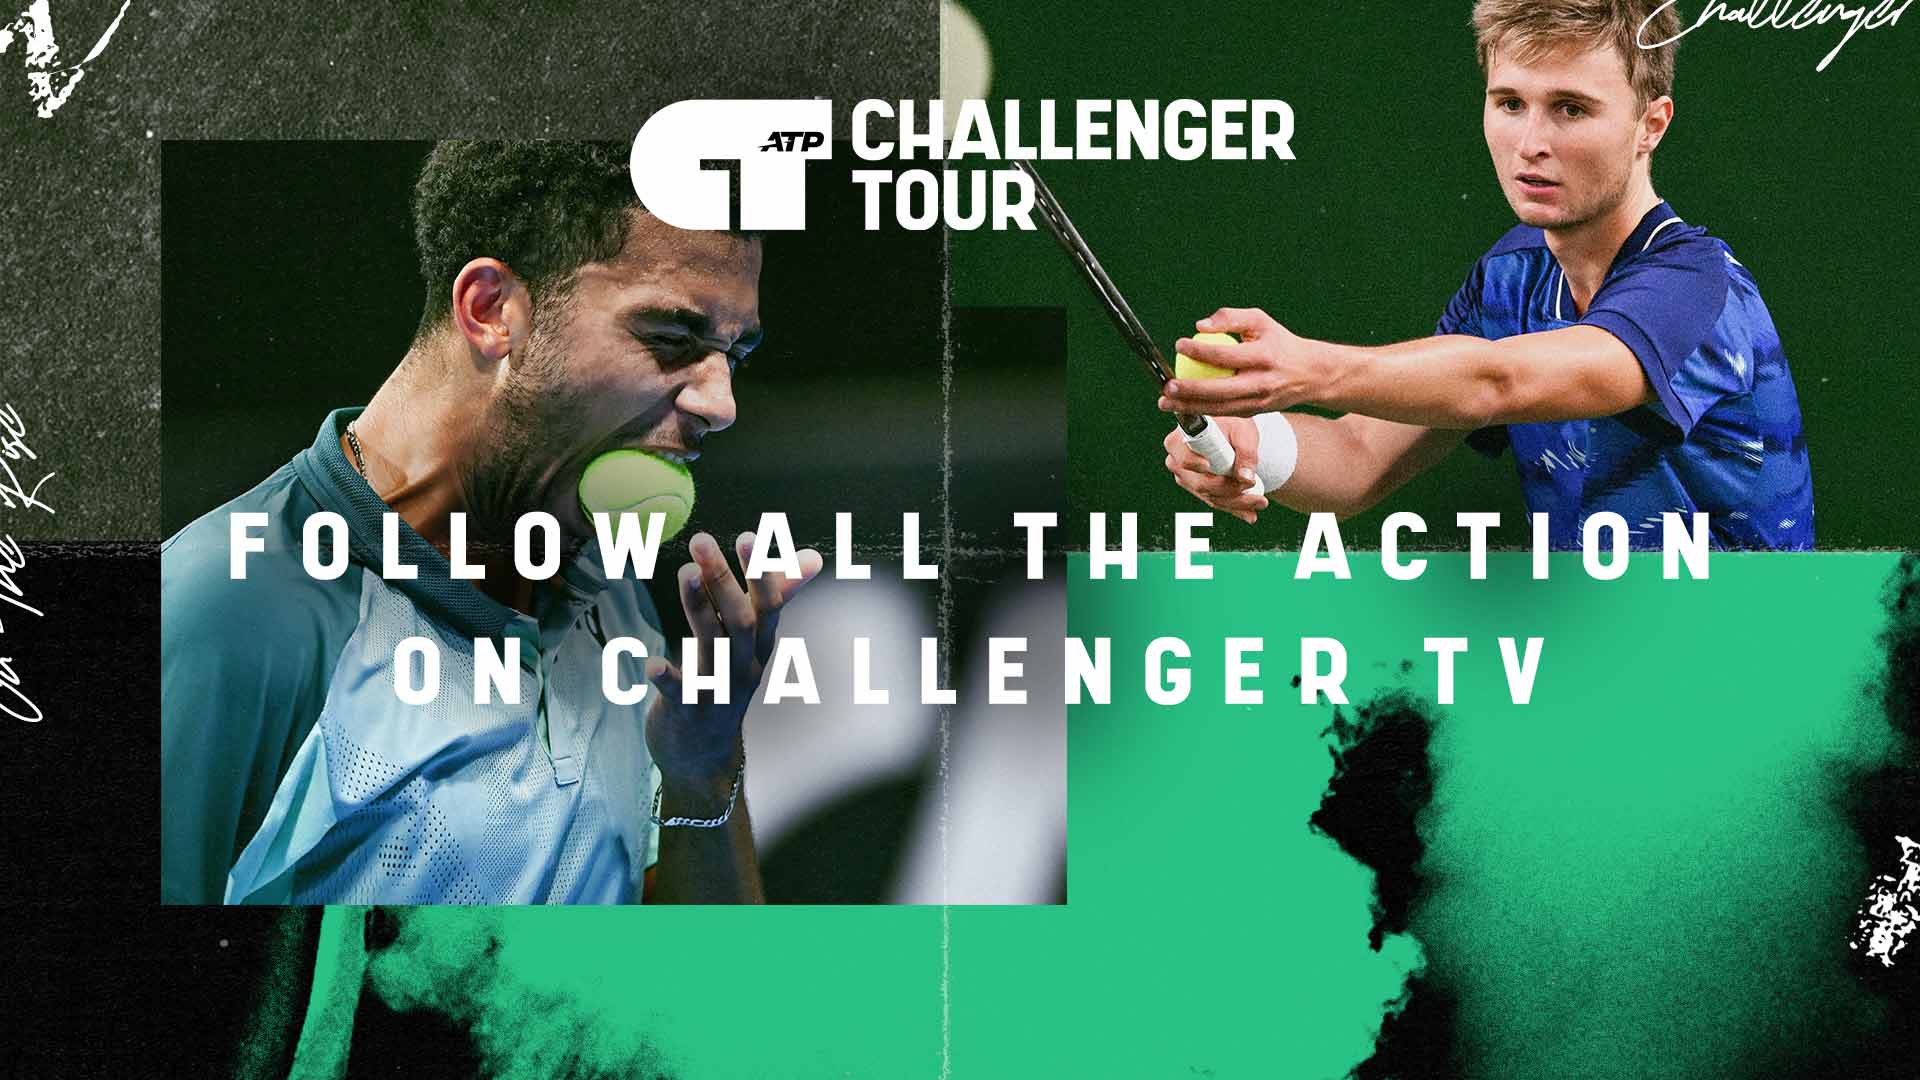 ATP Challenger TV